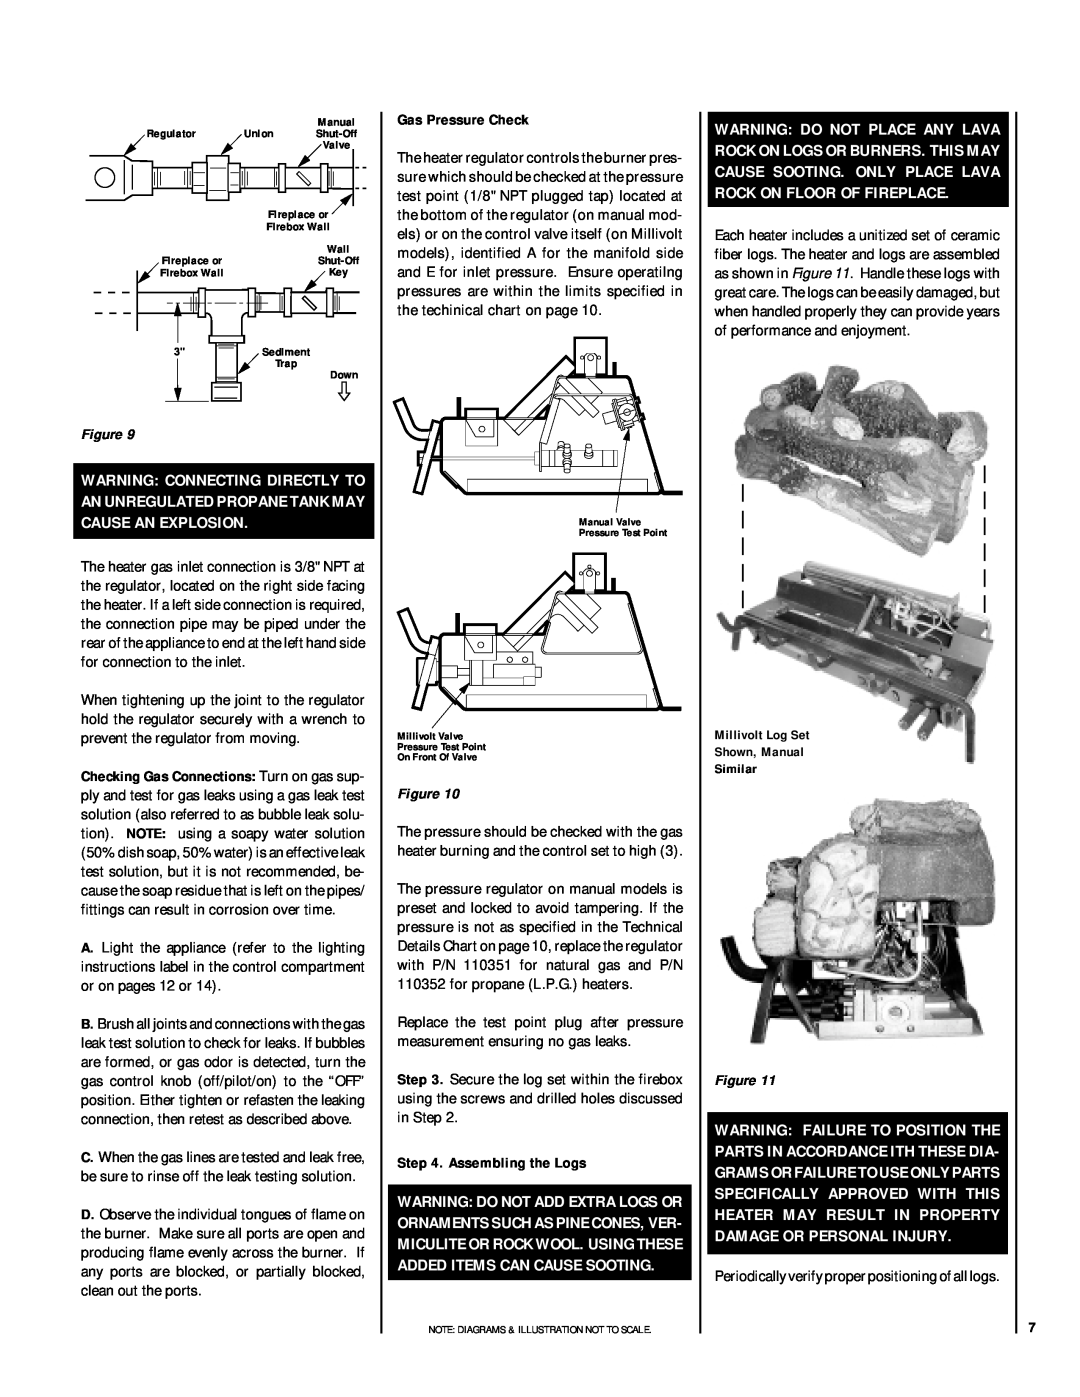 Superior VFGL-24MSN-4 SERIES* dimensions Gas Pressure Check, Assembling the Logs, Millivolt Log Set Shown, Manual Similar 